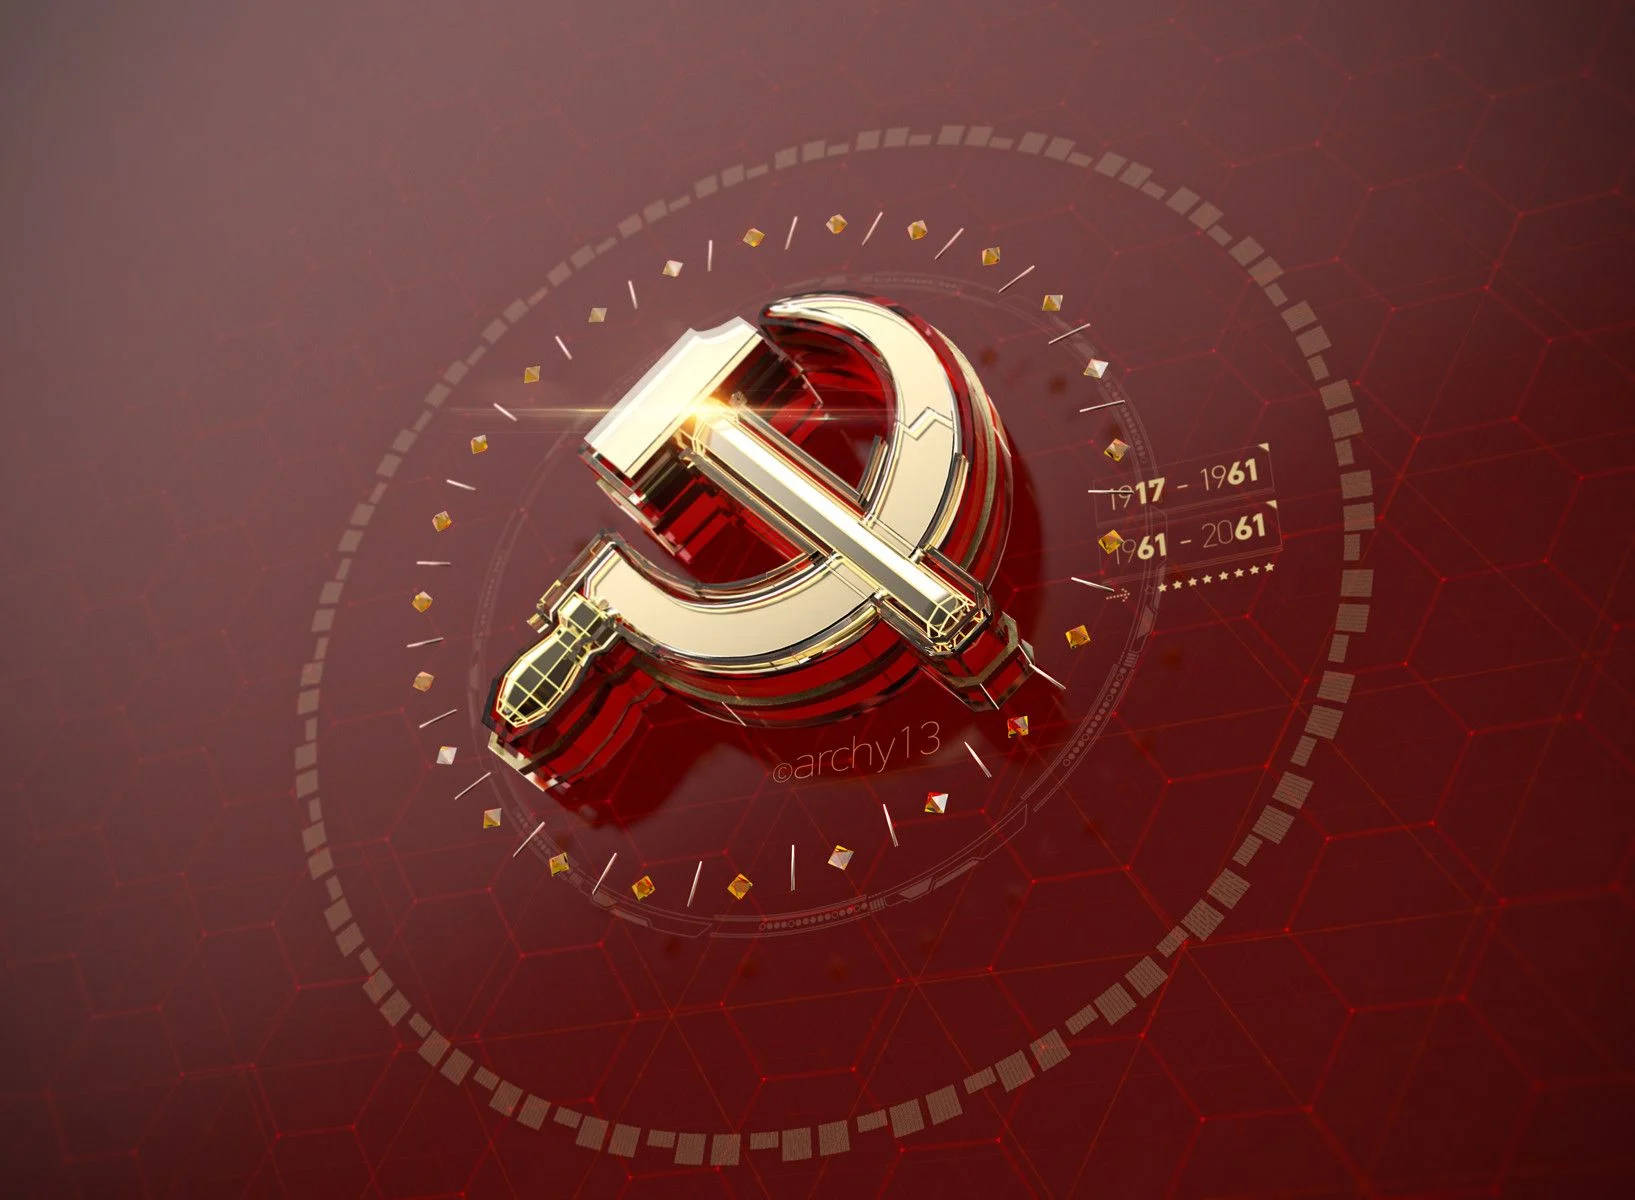 Sovjetunionensflagga Logotyp Kompass Wallpaper